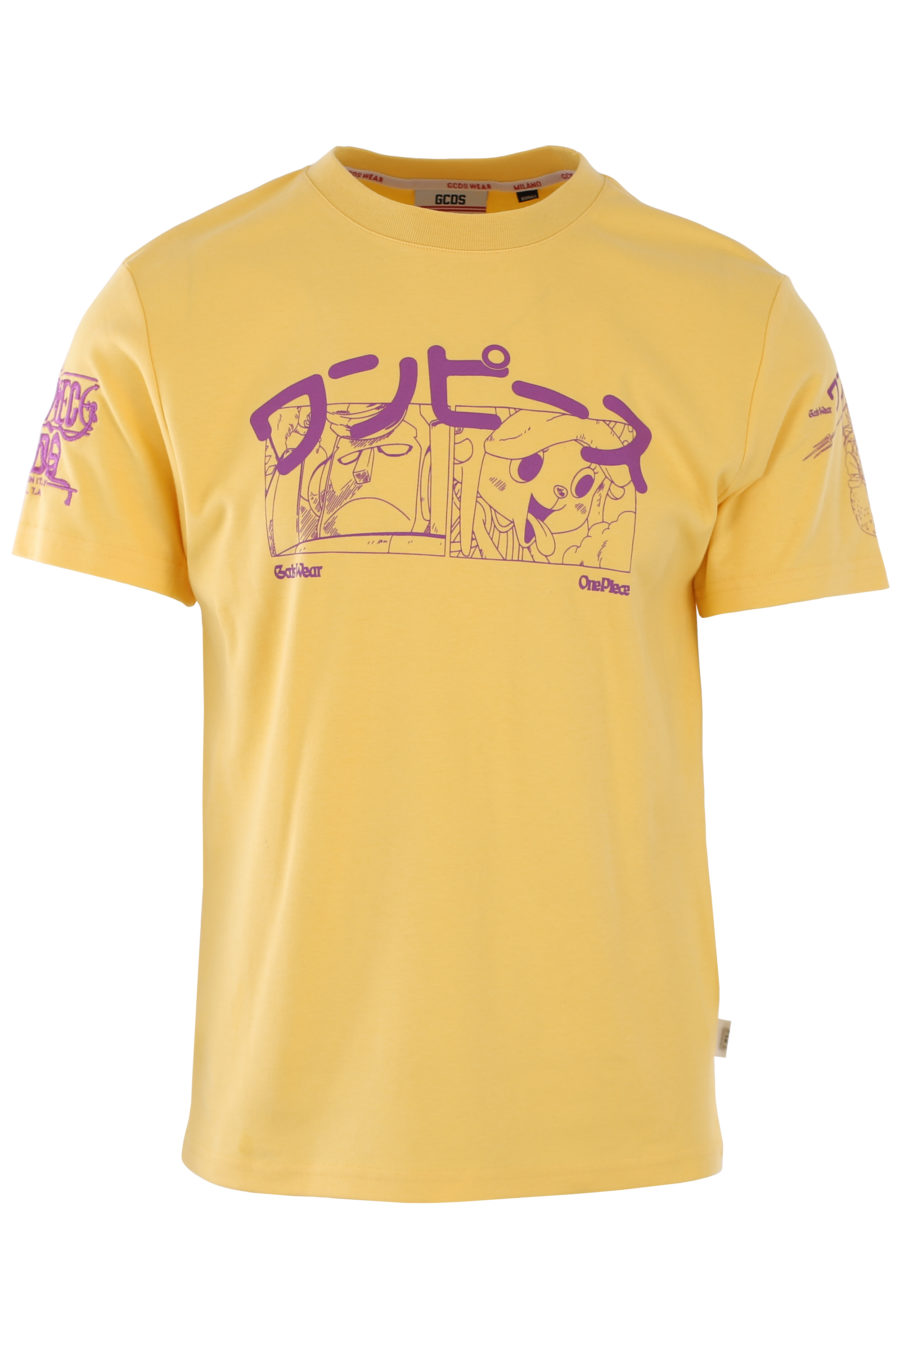 Yellow T-shirt with purple anime print - IMG 1127